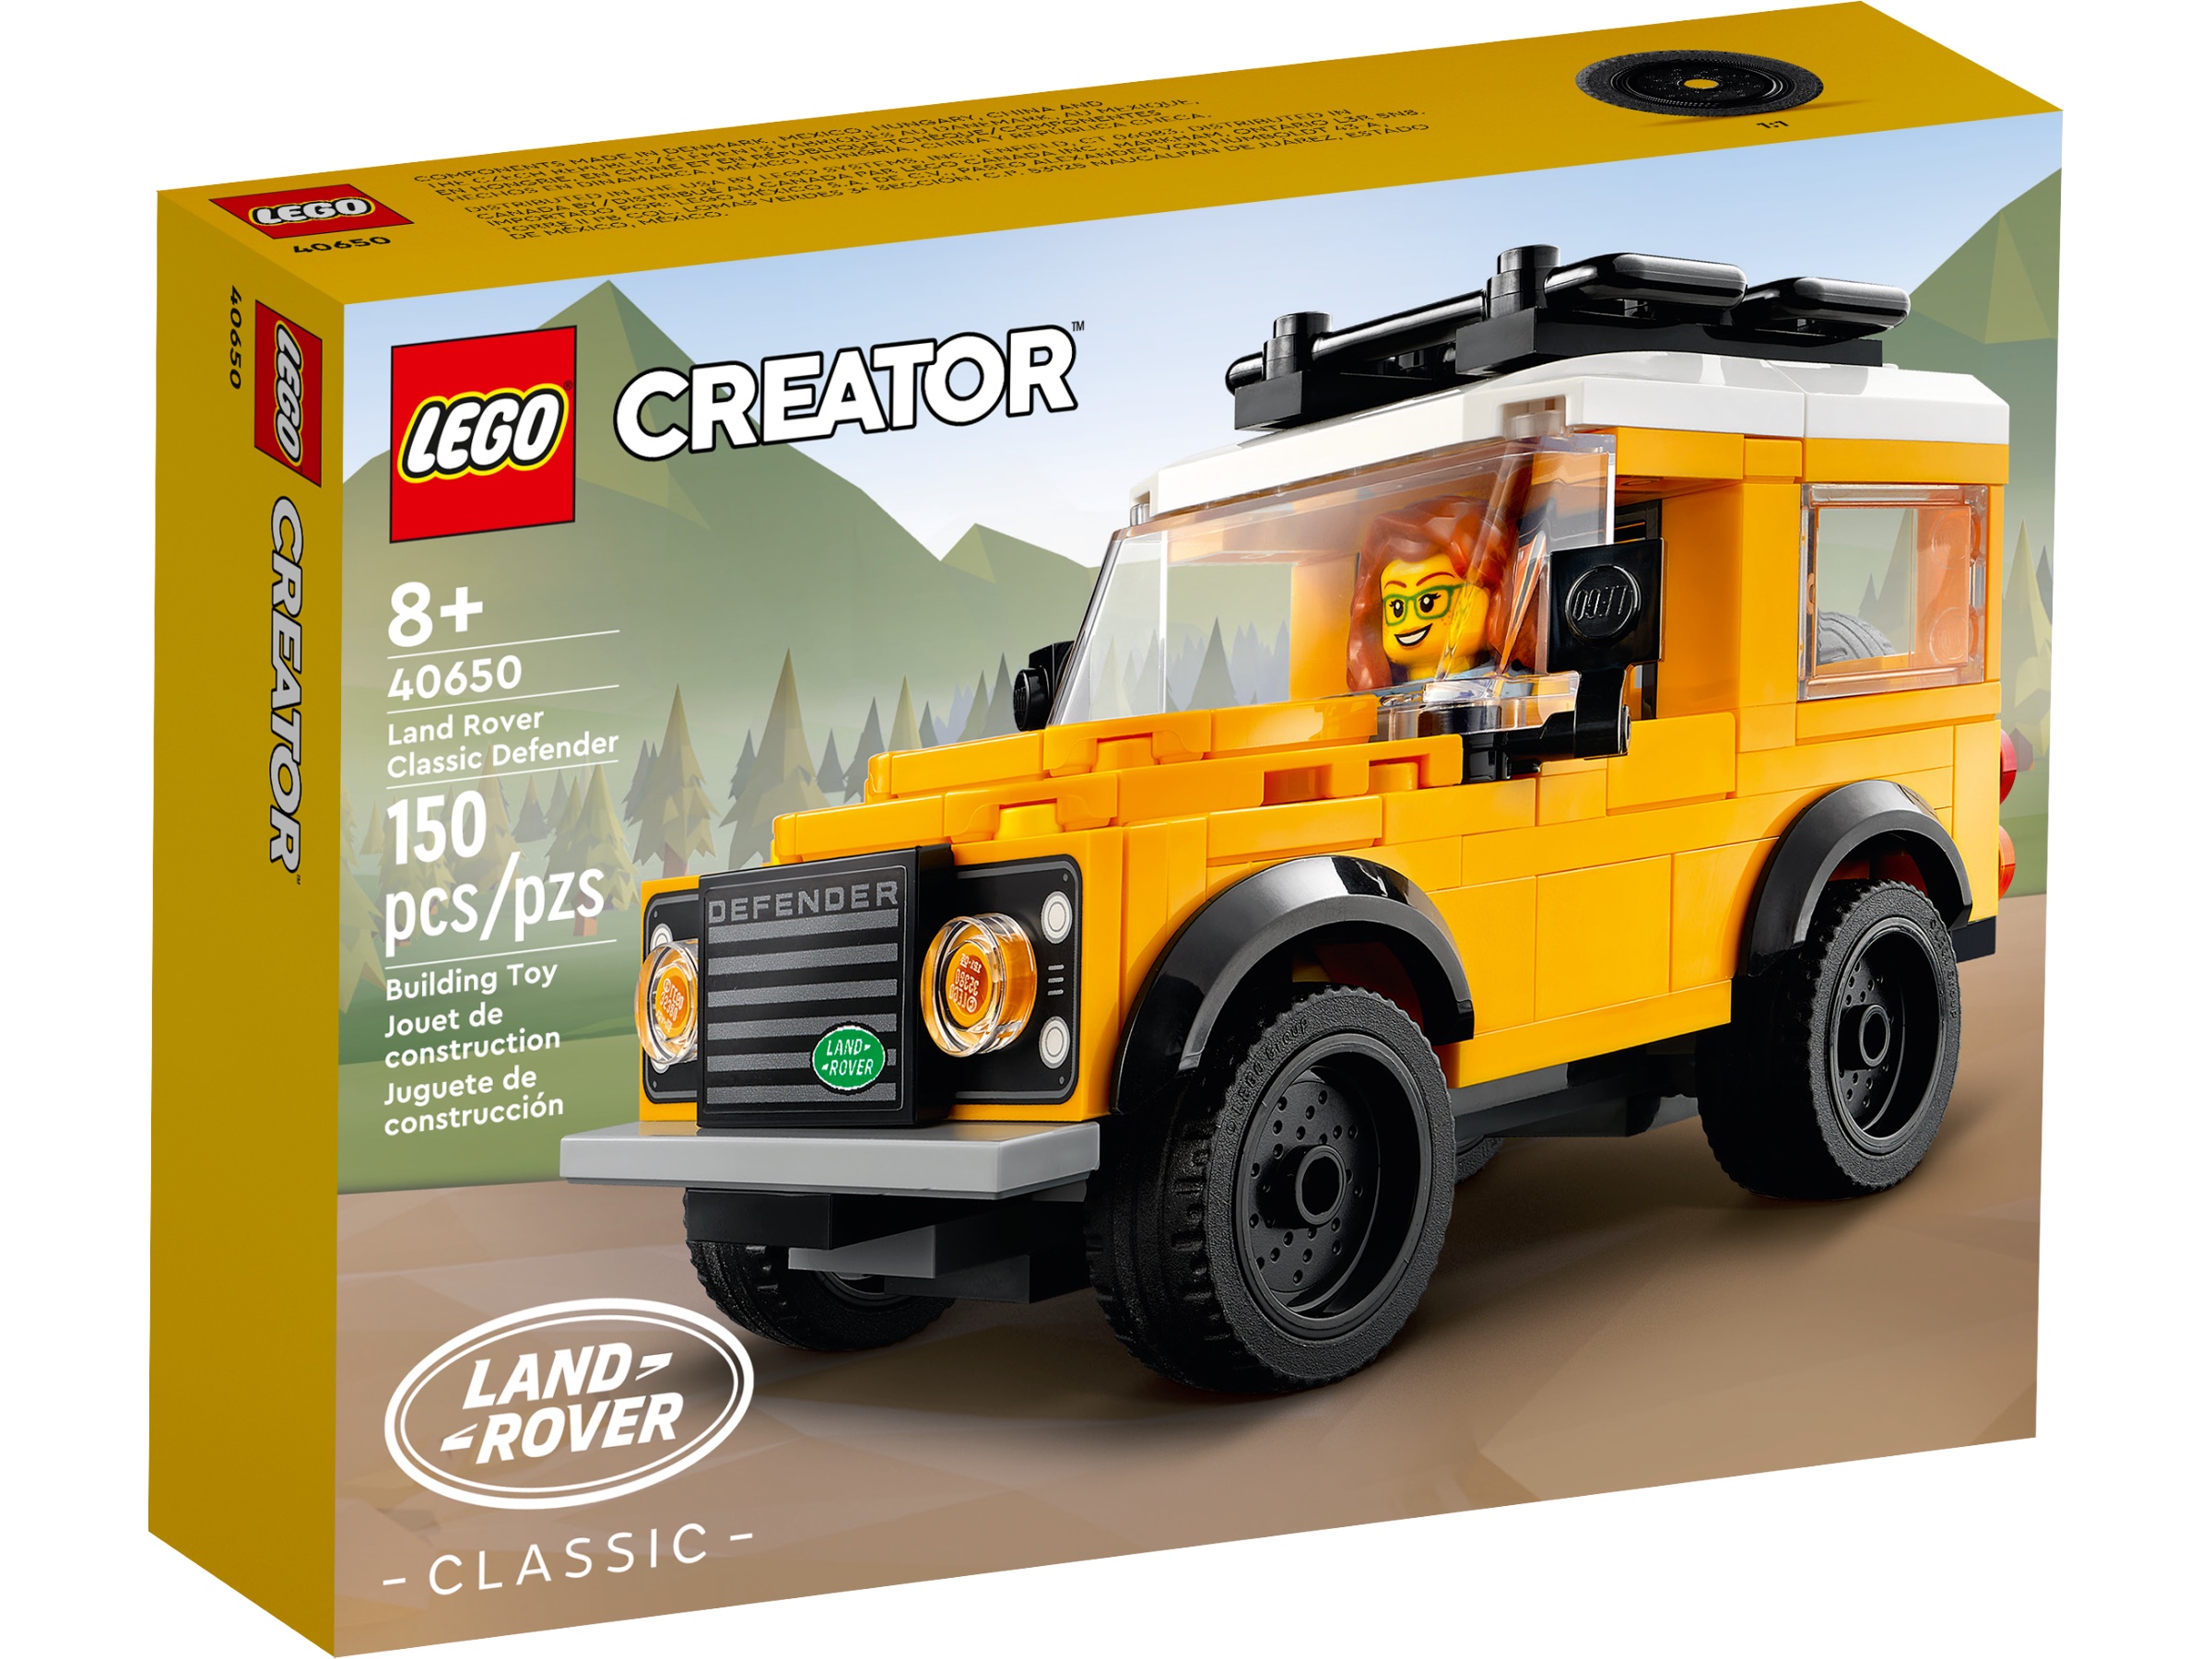 LEGO Creator Land Rover Classic Defender Set 40650 - US